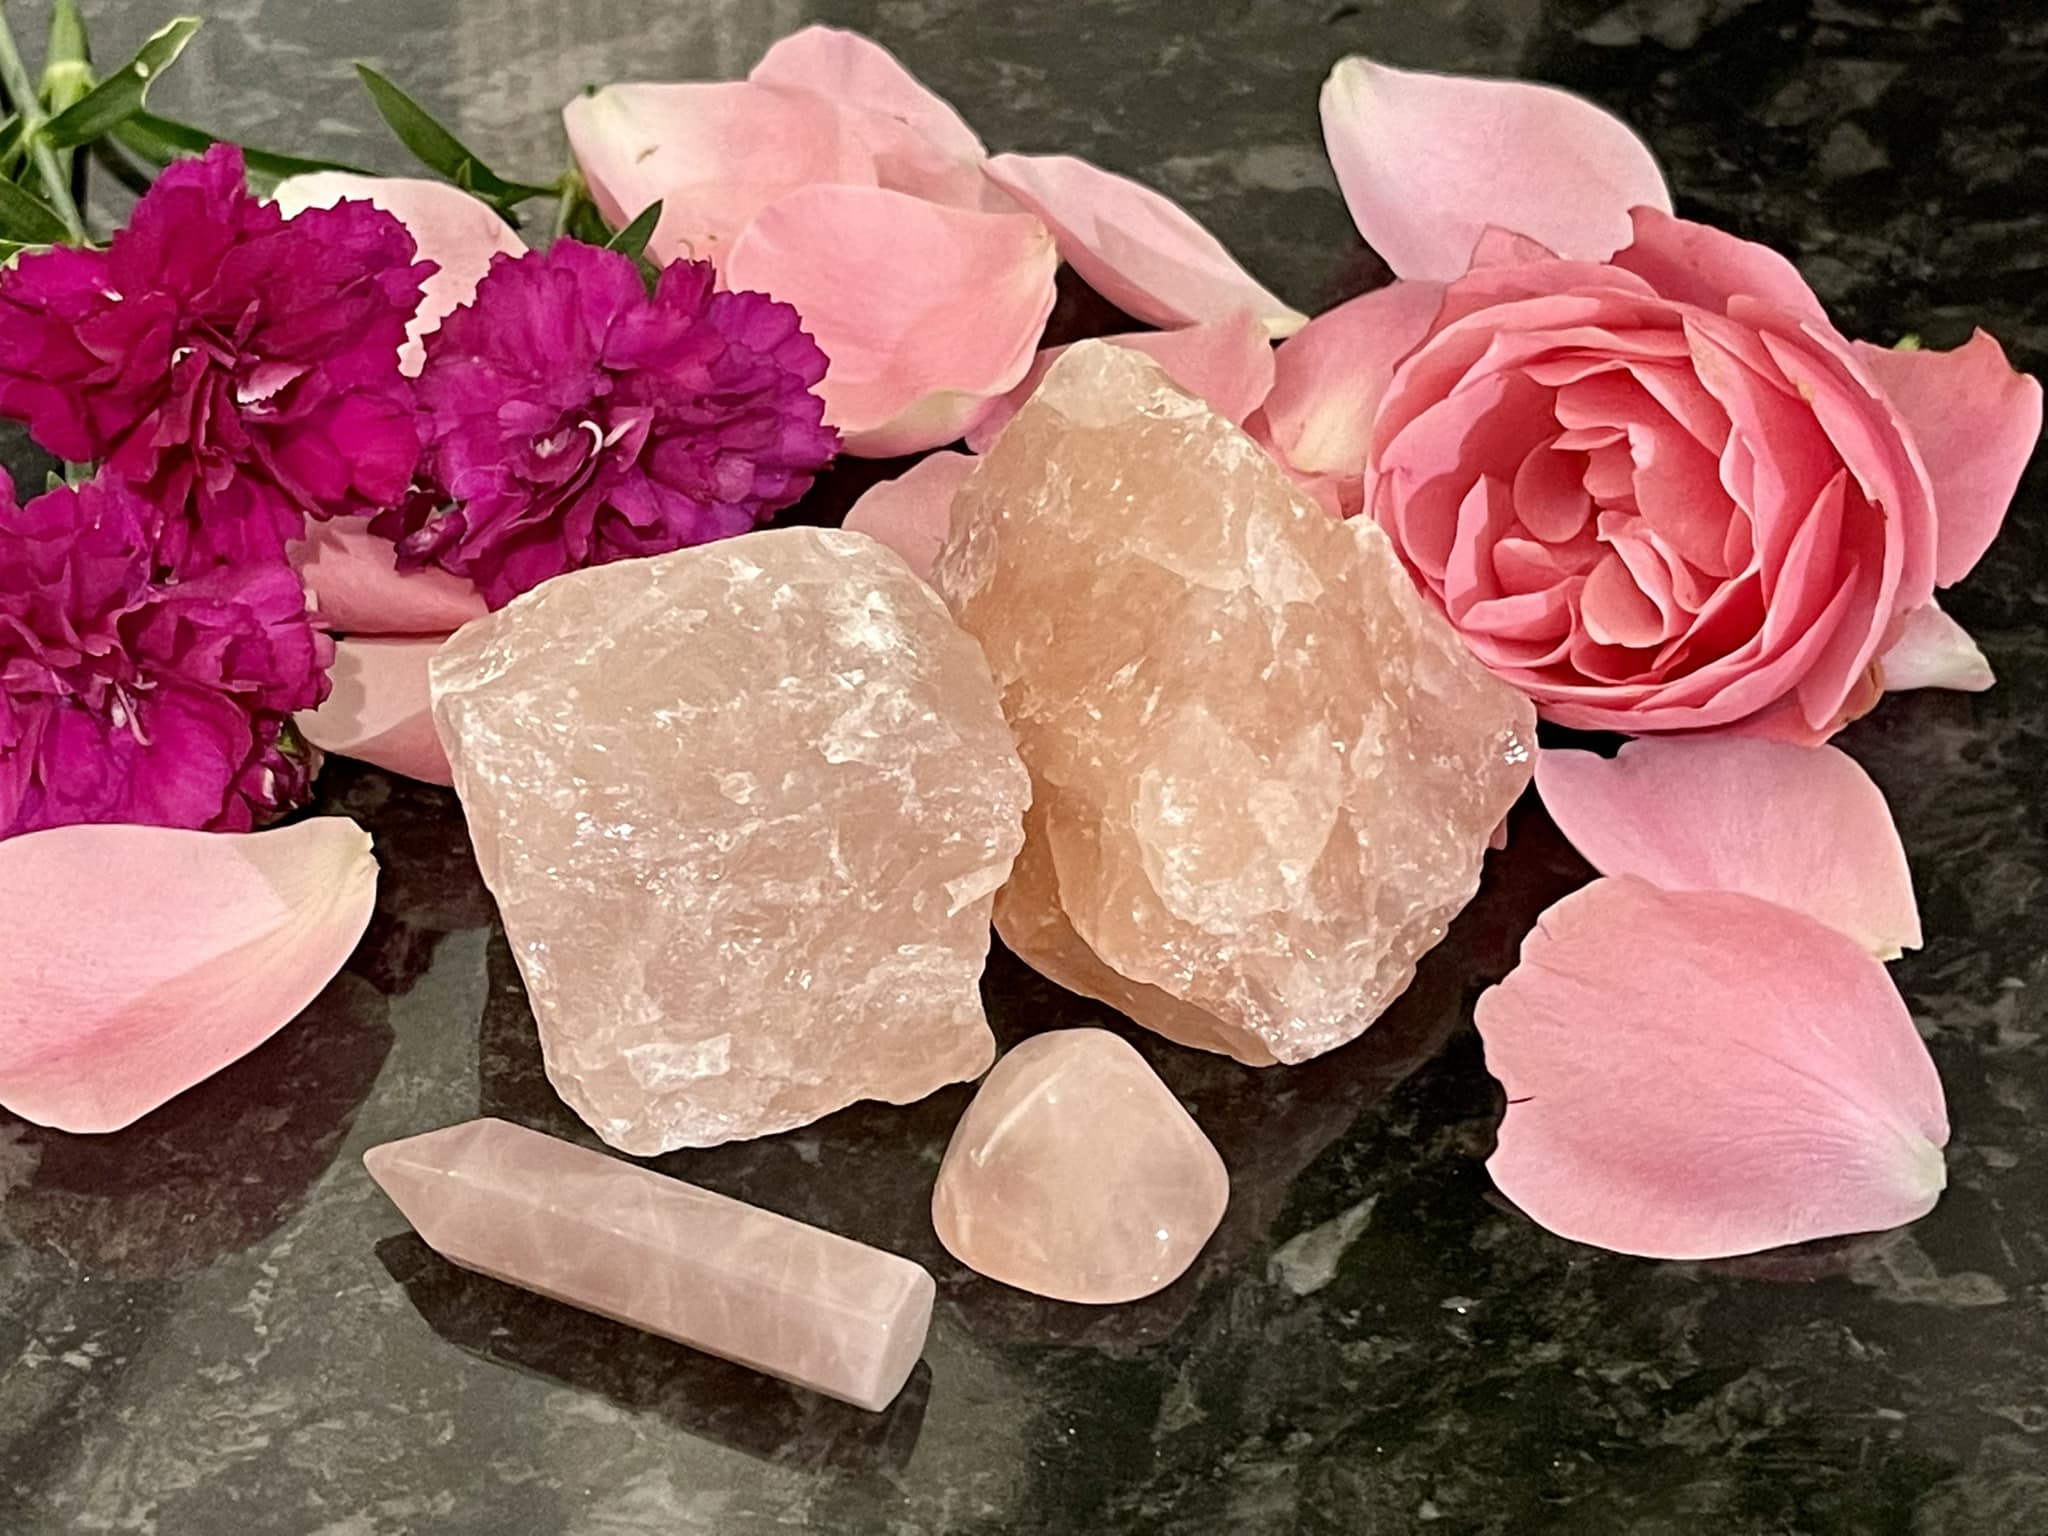 Healing Properties of Rose Quartz